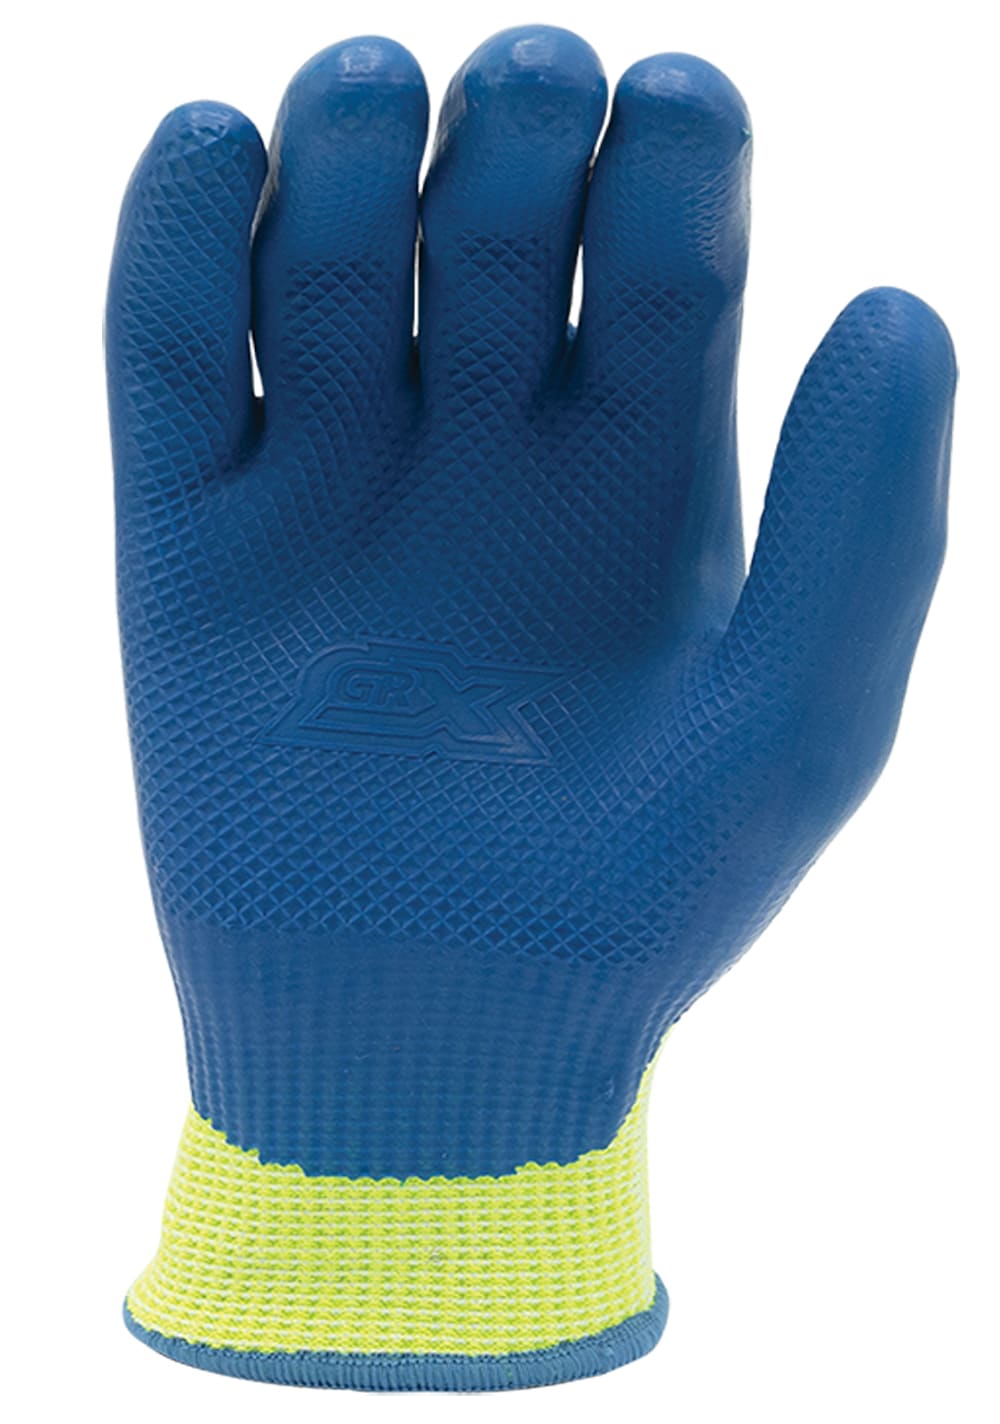 GRXIND300 Blue Latex Crinkle Gloves - Mid-Michigan Metal Sales